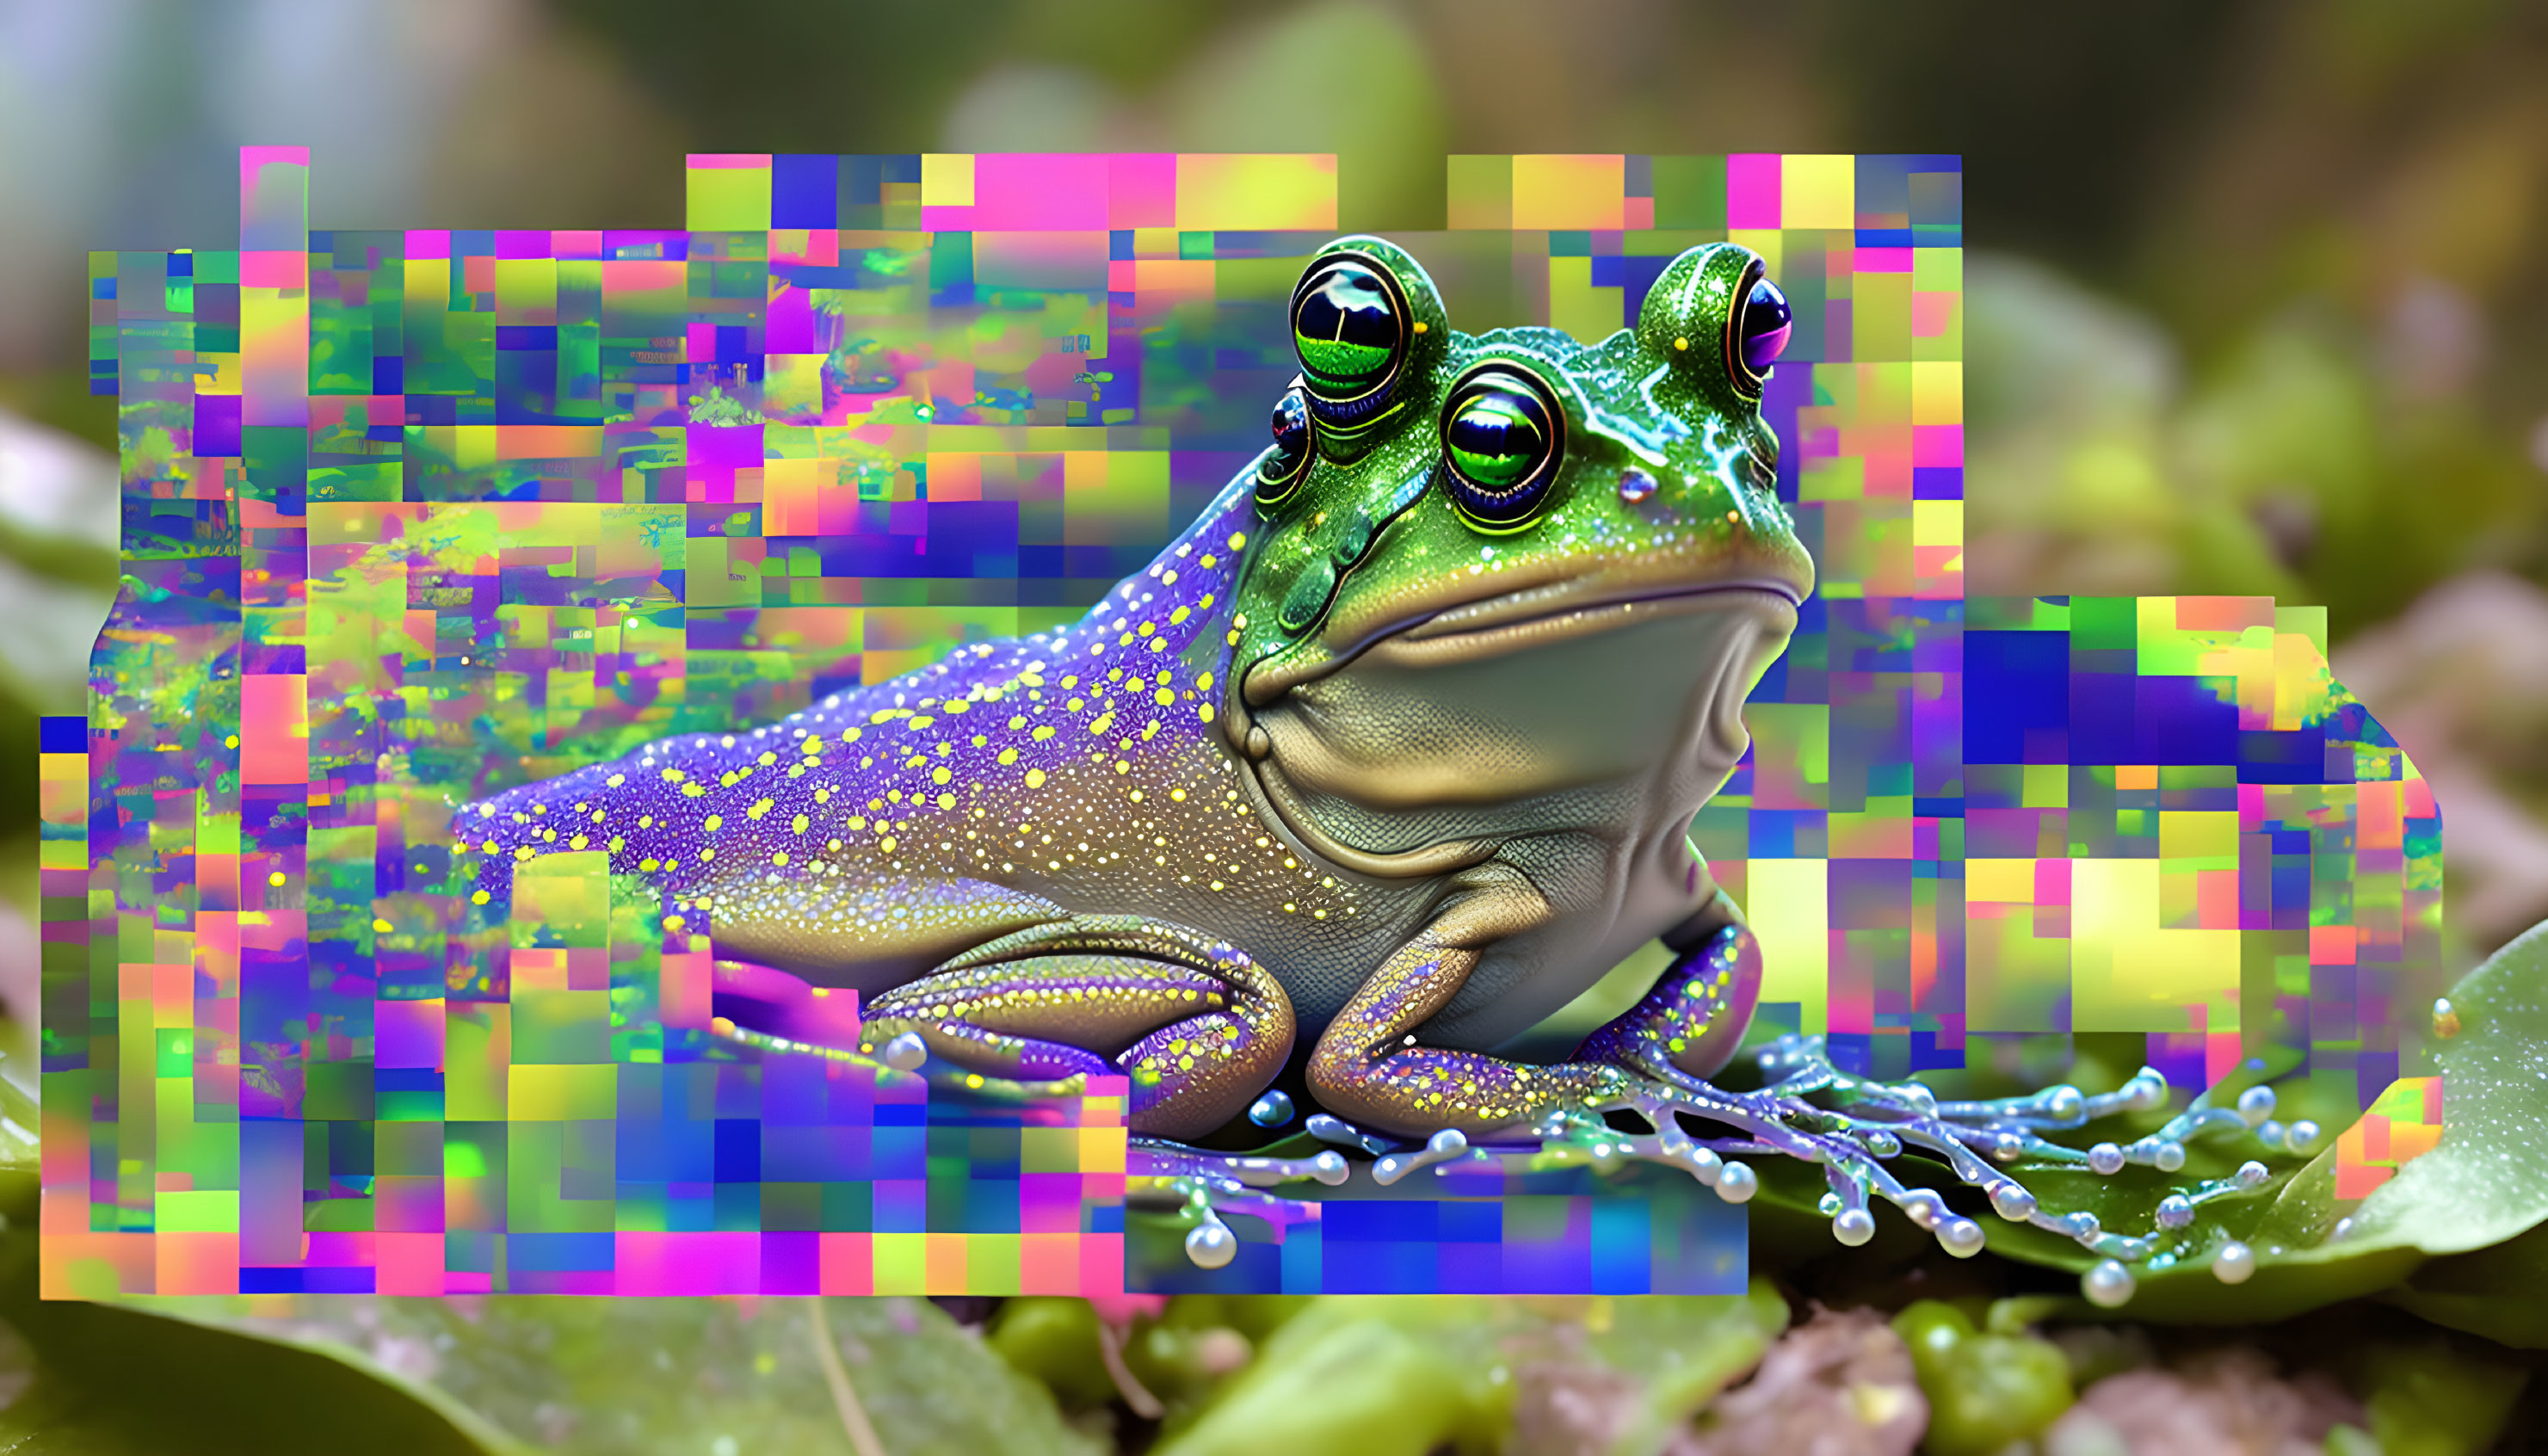 Glitched Frog